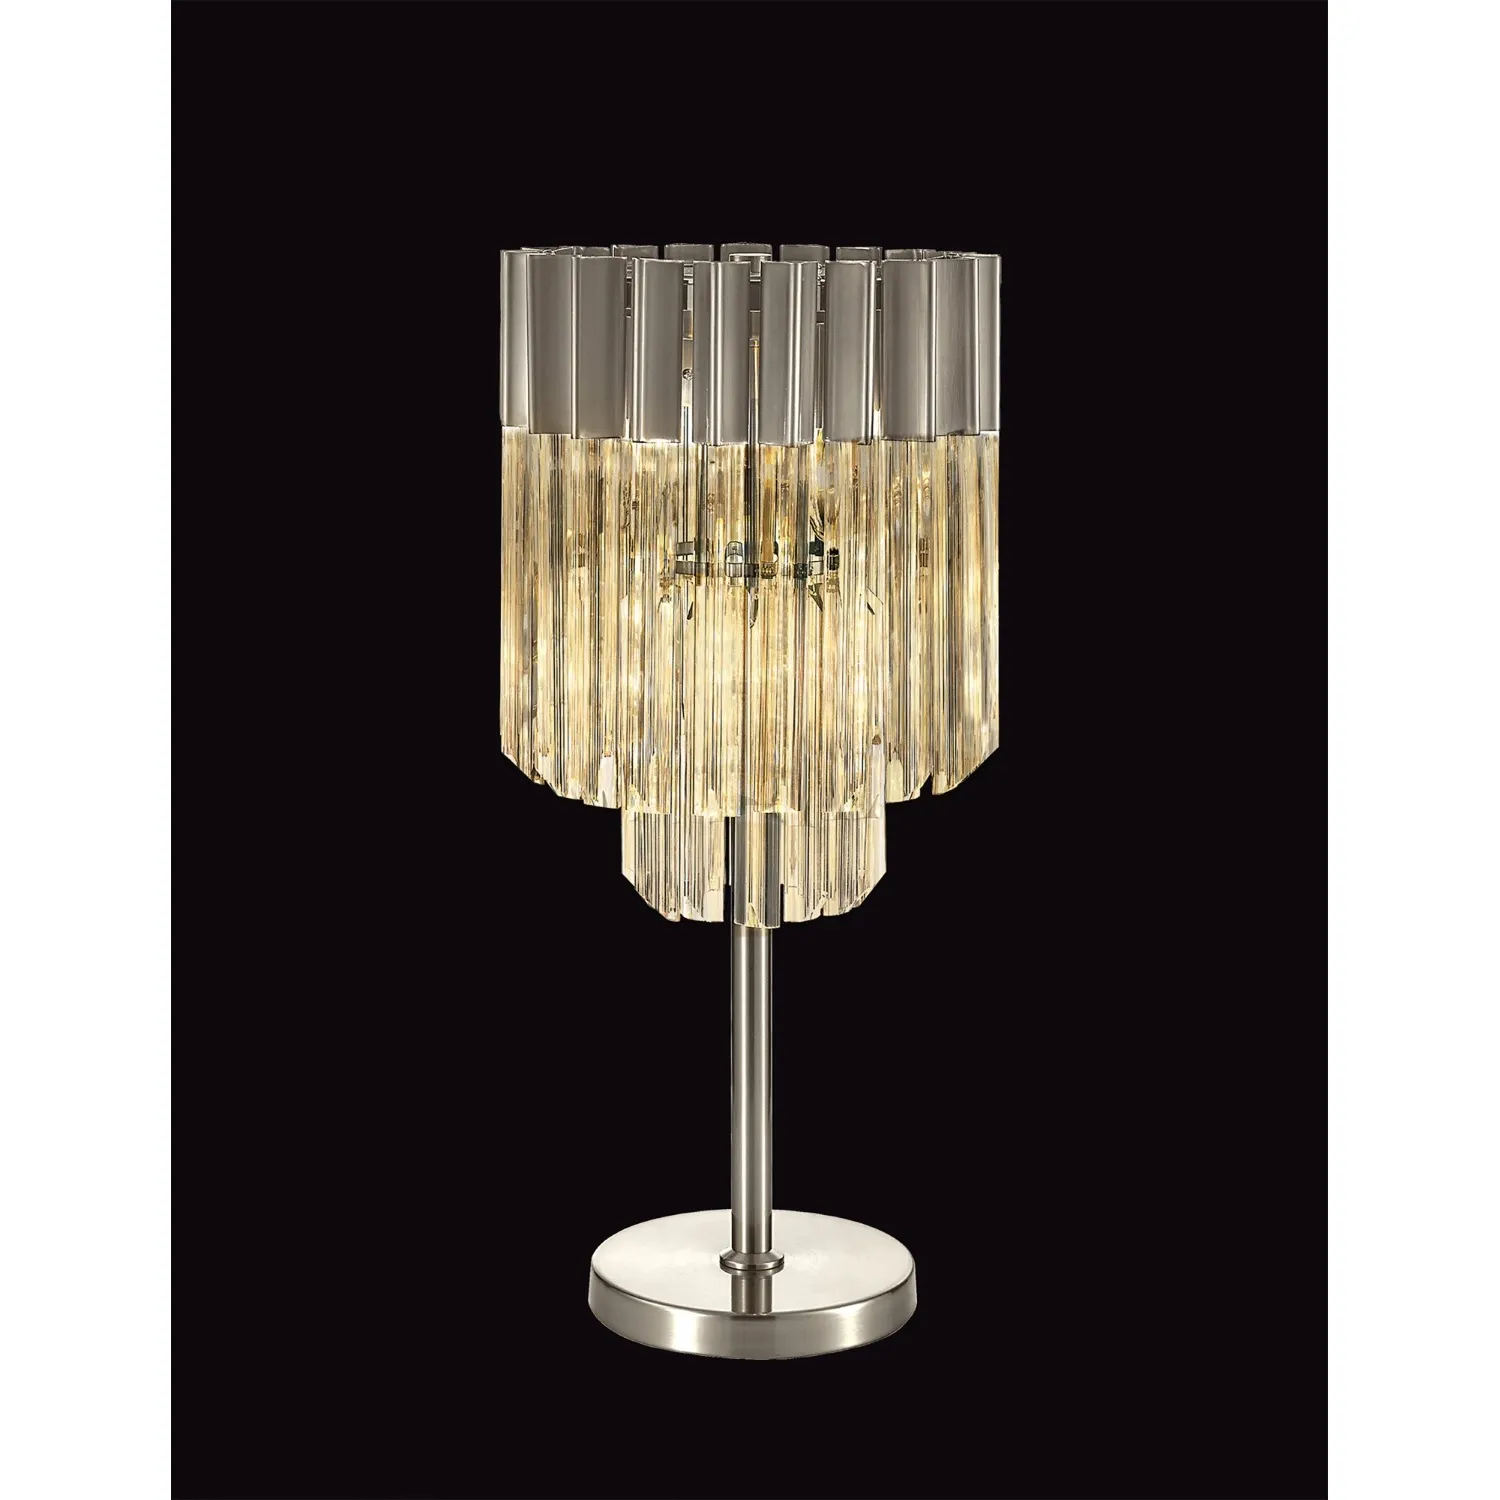 Aldershot 30 x H65cm Table Lamp 3 Light E14, Polished Nickel Clear Sculpted Glass